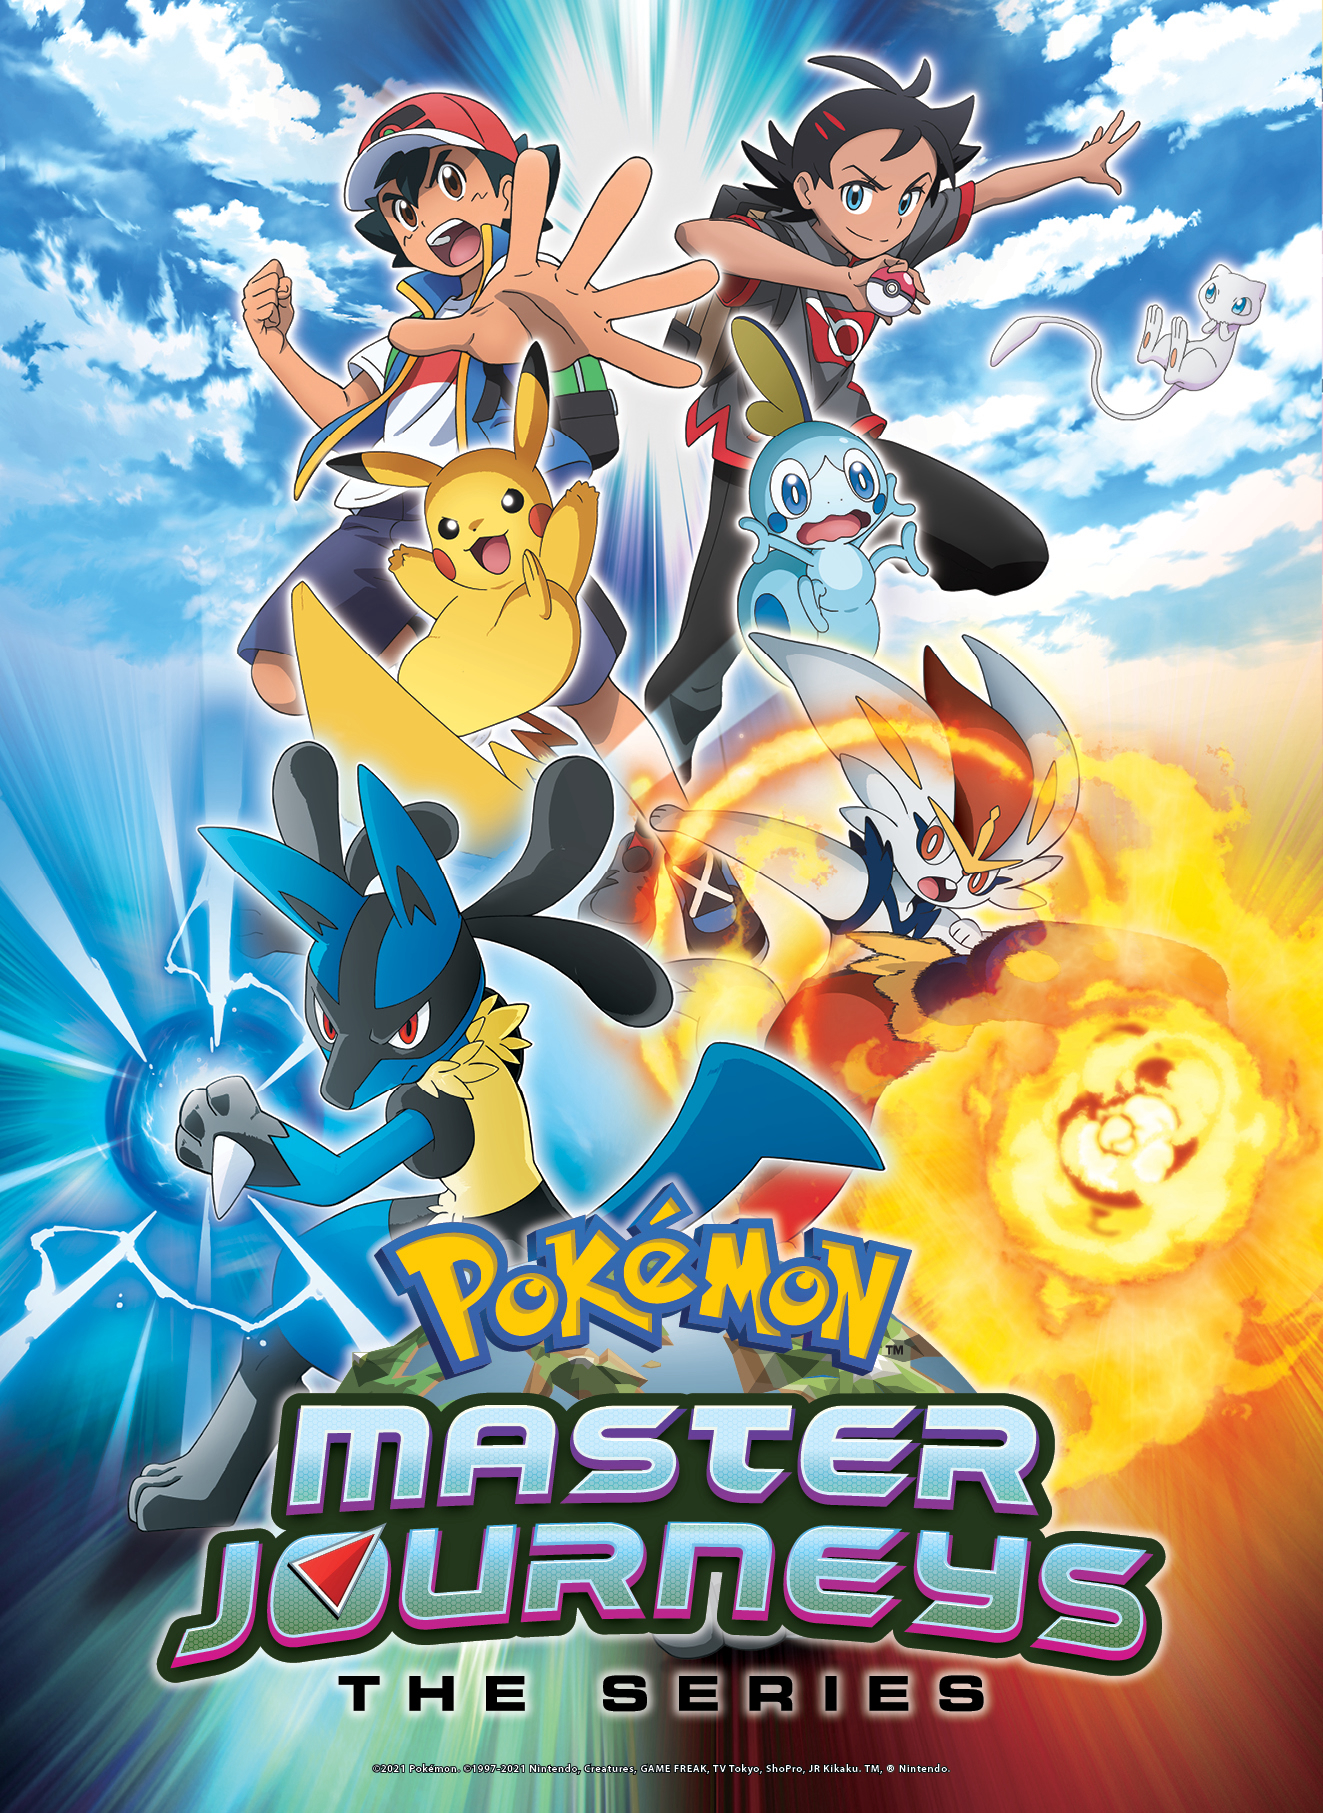 Hành trình Pokémon: Loạt phim (Pokémon Master Journeys) - Pokémon Journeys: The Series